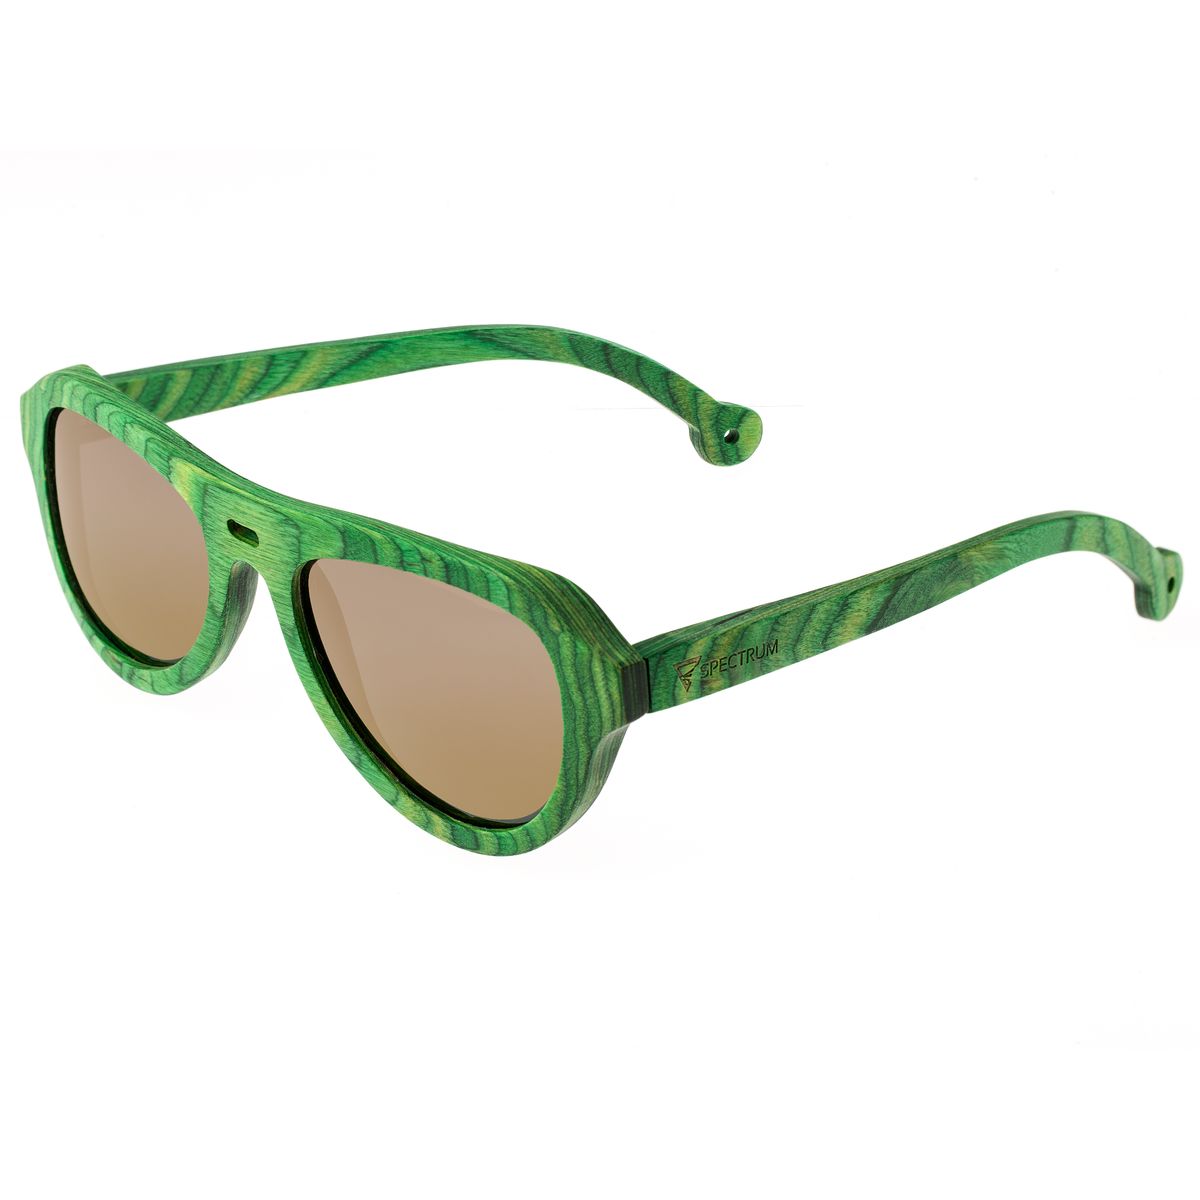 Photos - Sunglasses Spectrum Polarized Wooden  - Morrison - Green/Gold SSGS 